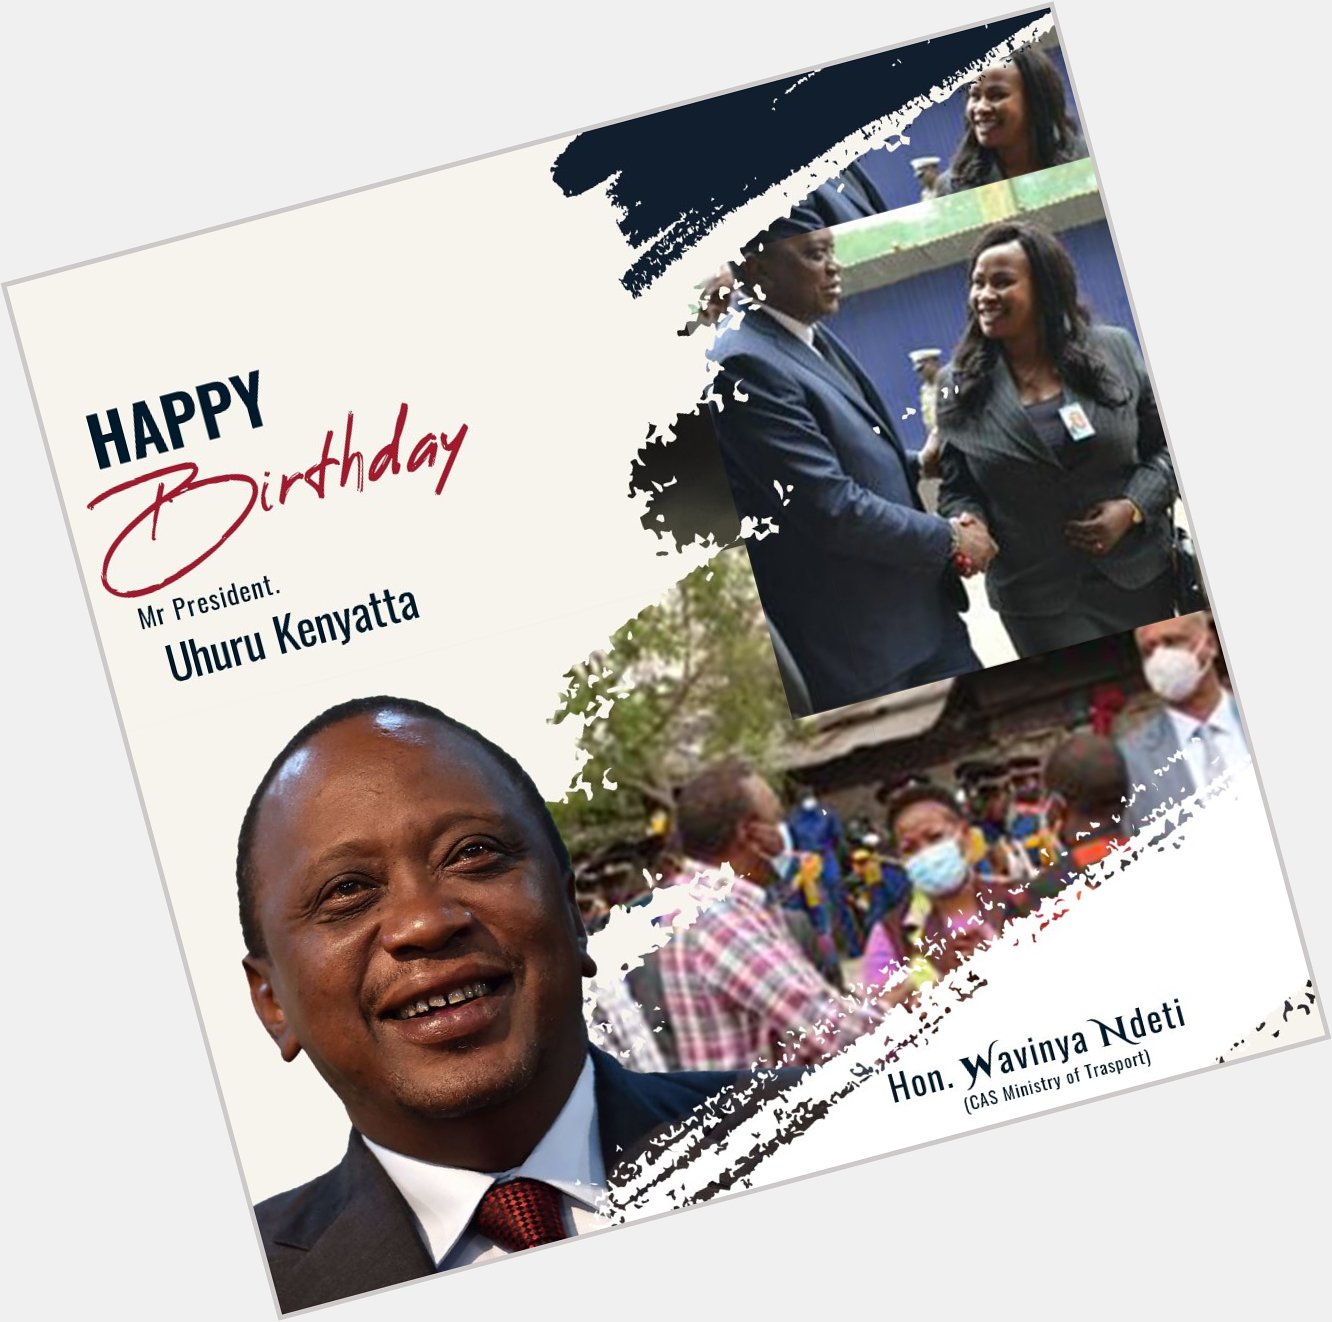   wishes H.E the president Uhuru Kenyatta a Happy Birthday too 